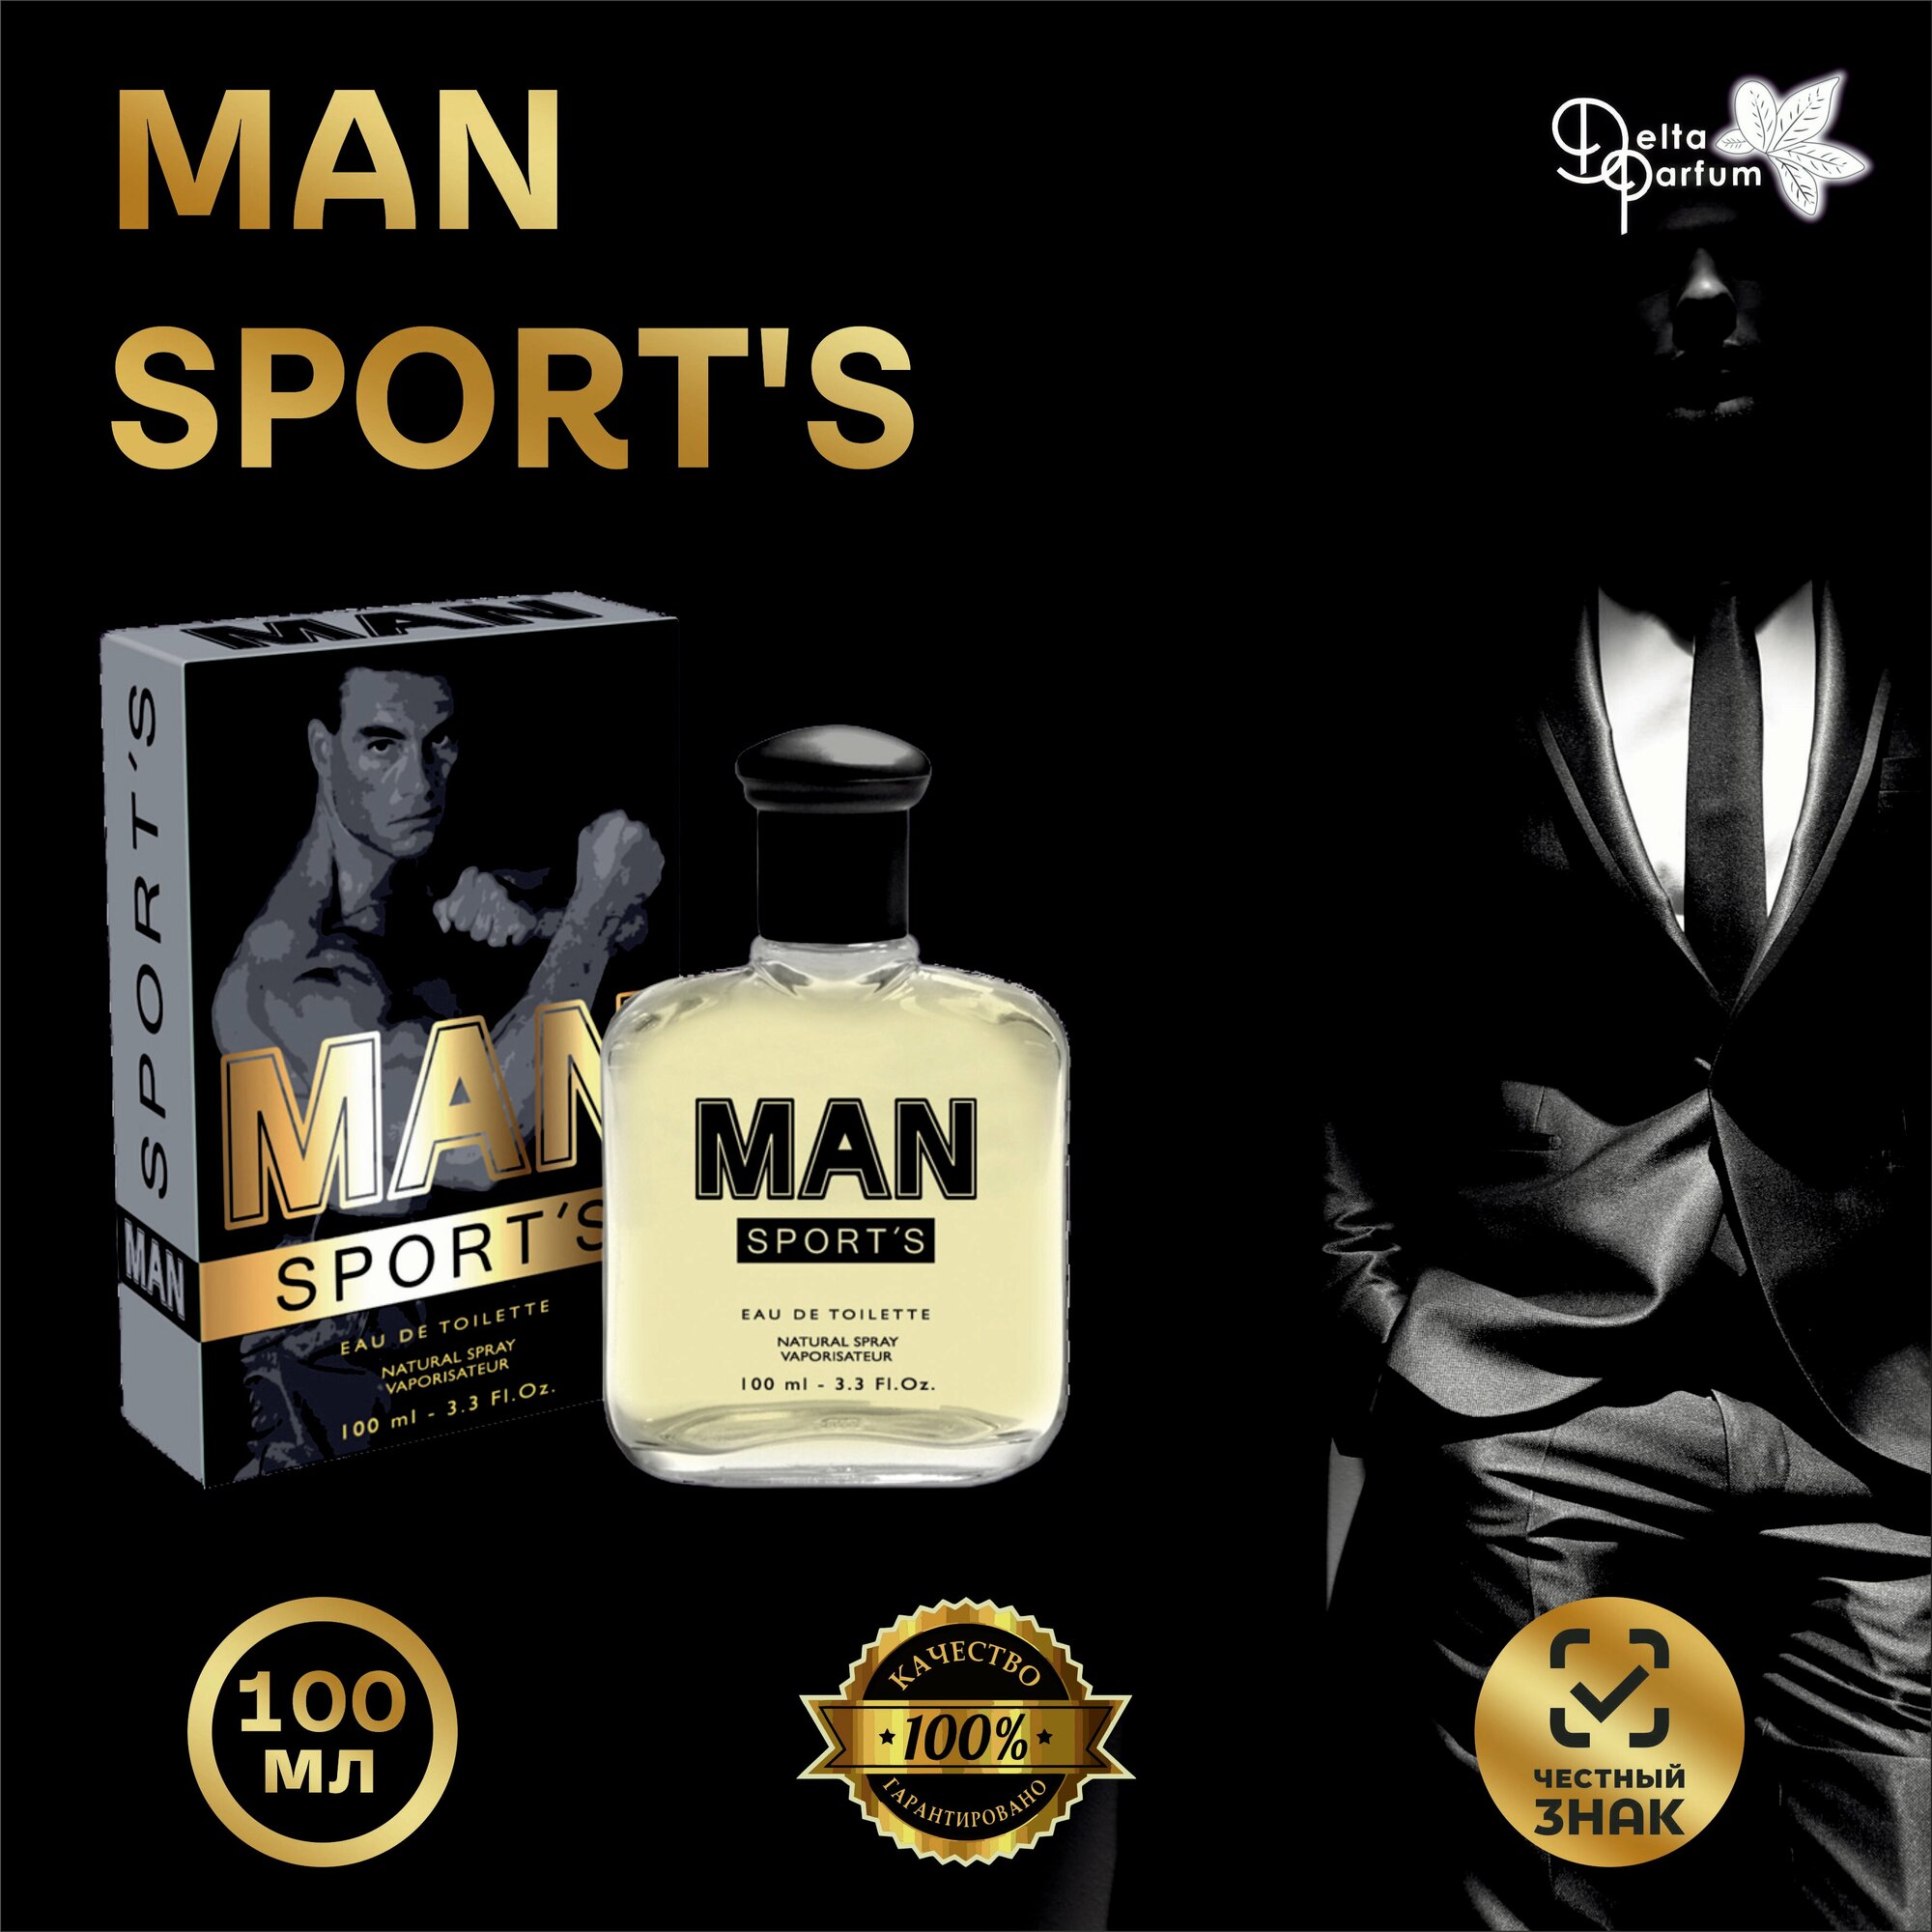 Delta parfum Туалетная вода мужская Man Sport's